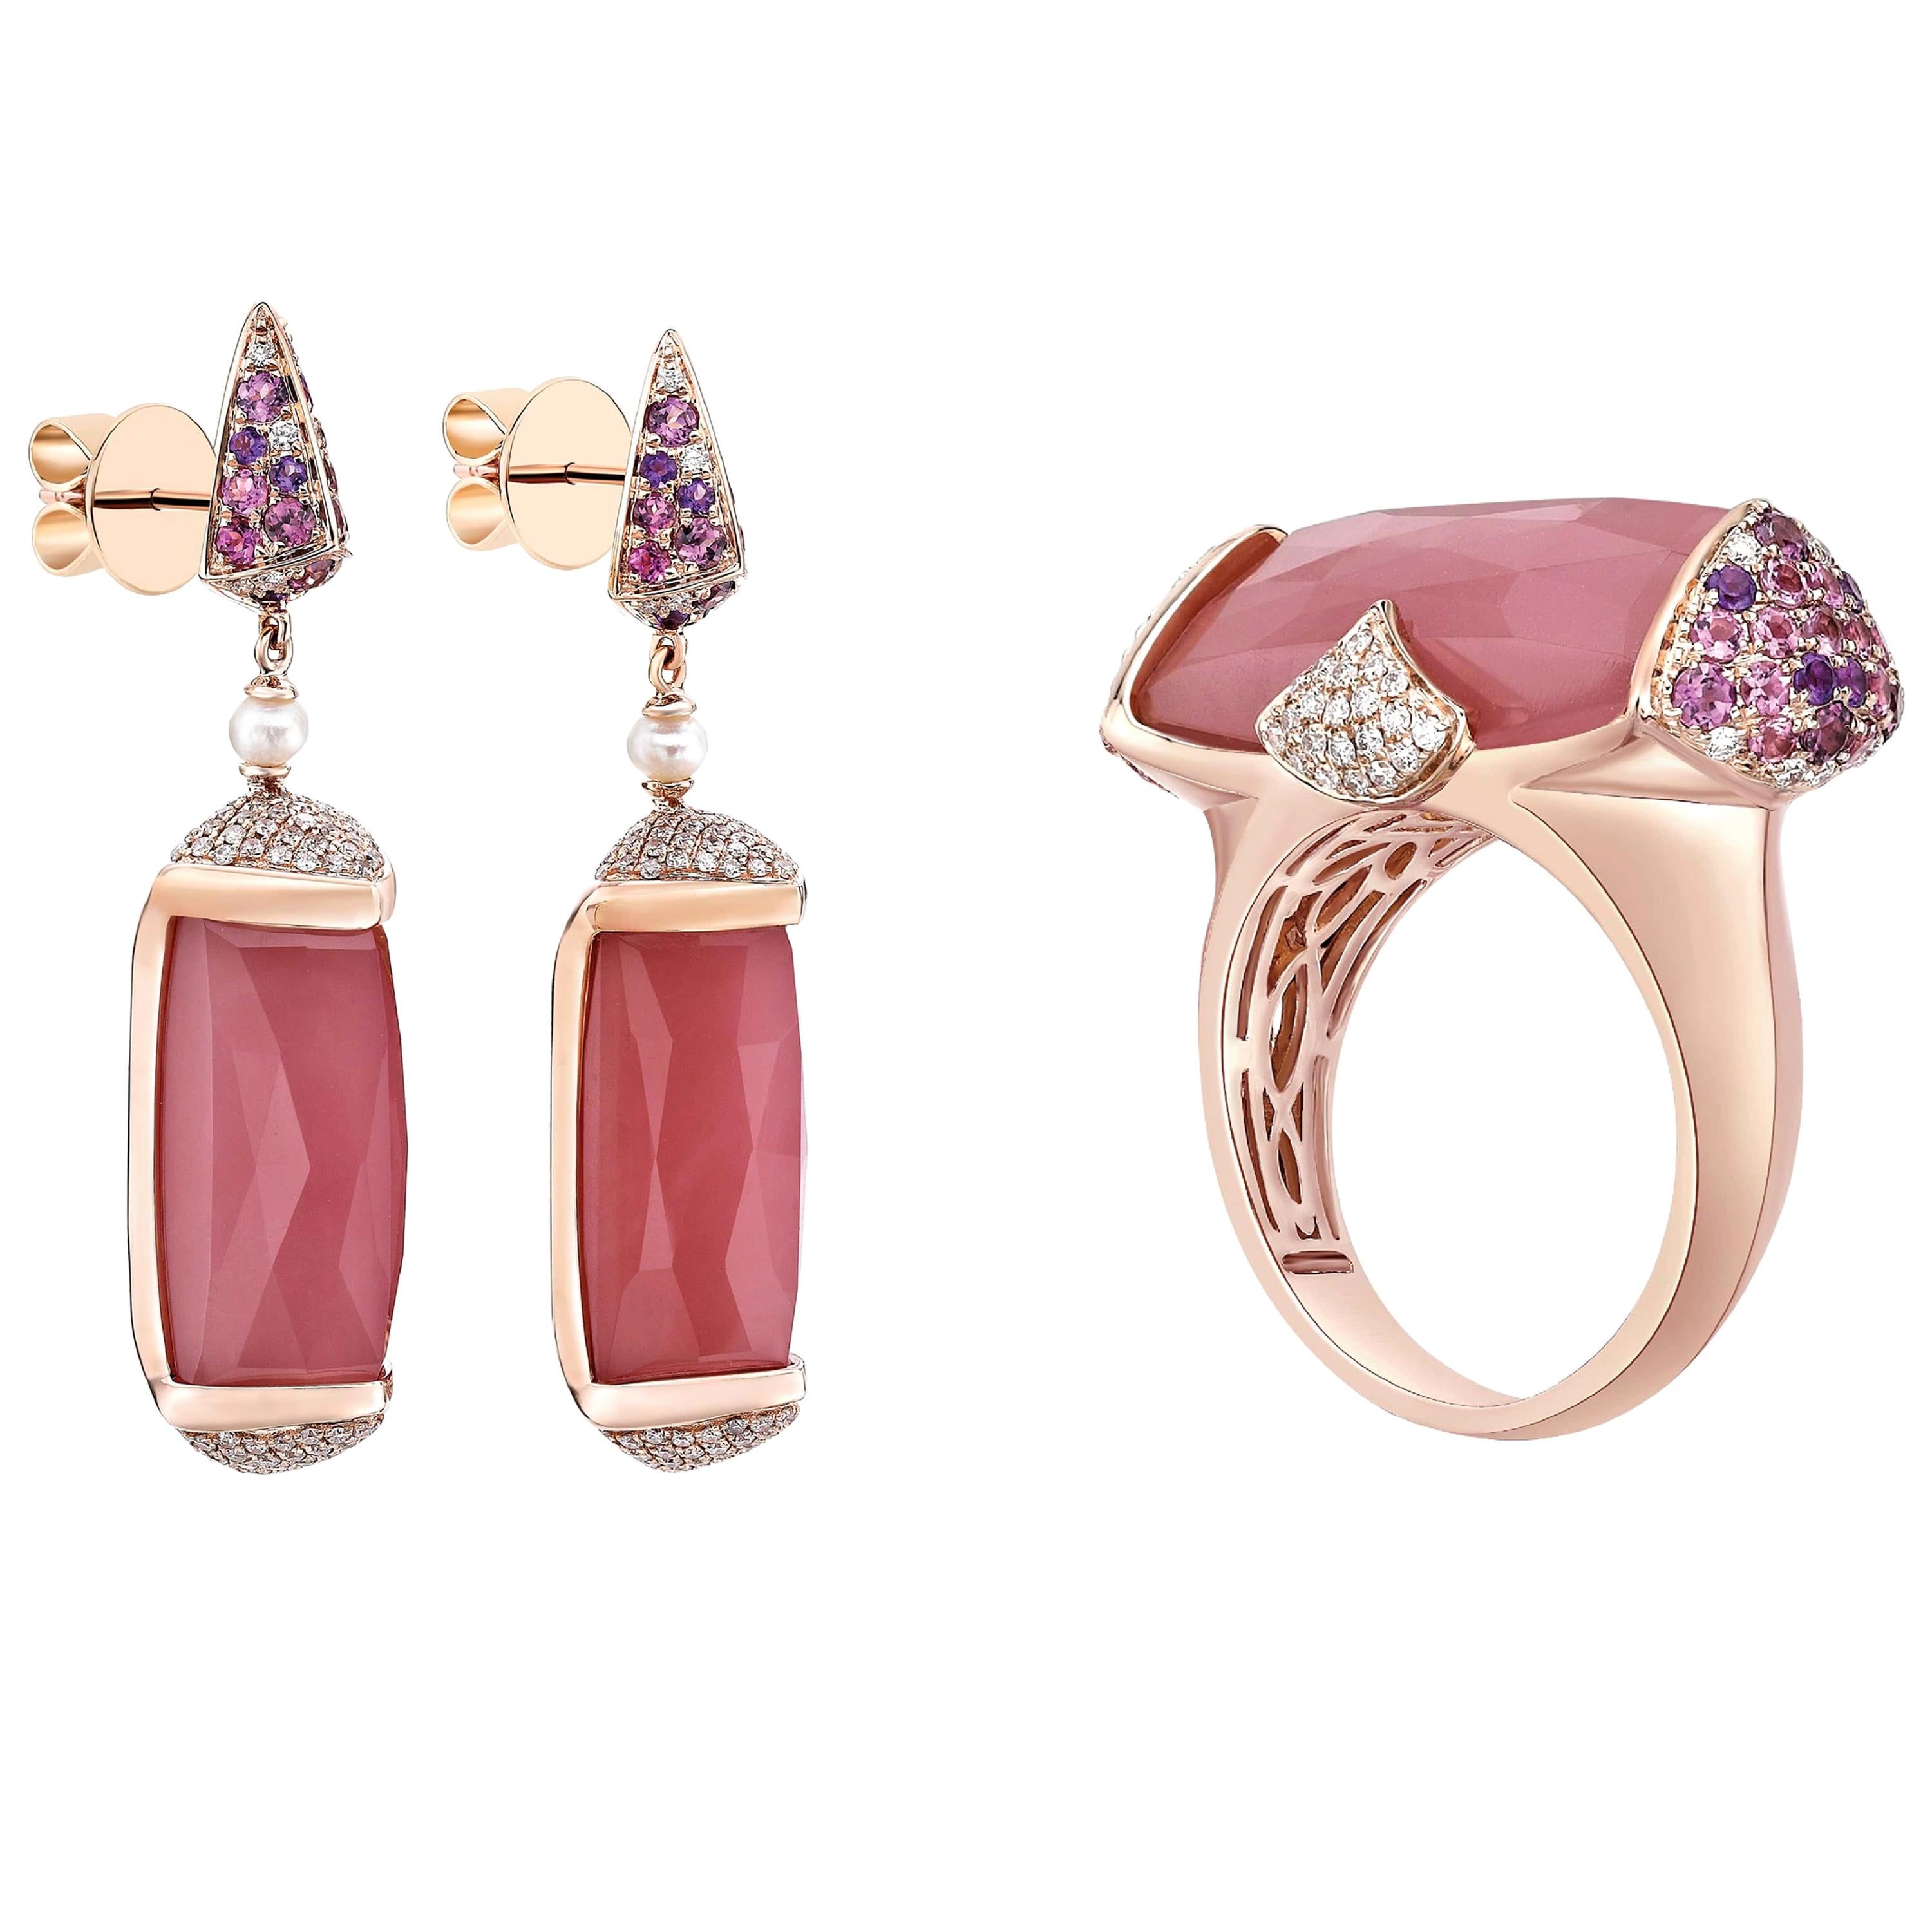 44 Carat Guava Quartz Ring and Earring Set in 18 Karat Rose Gold with Diamonds